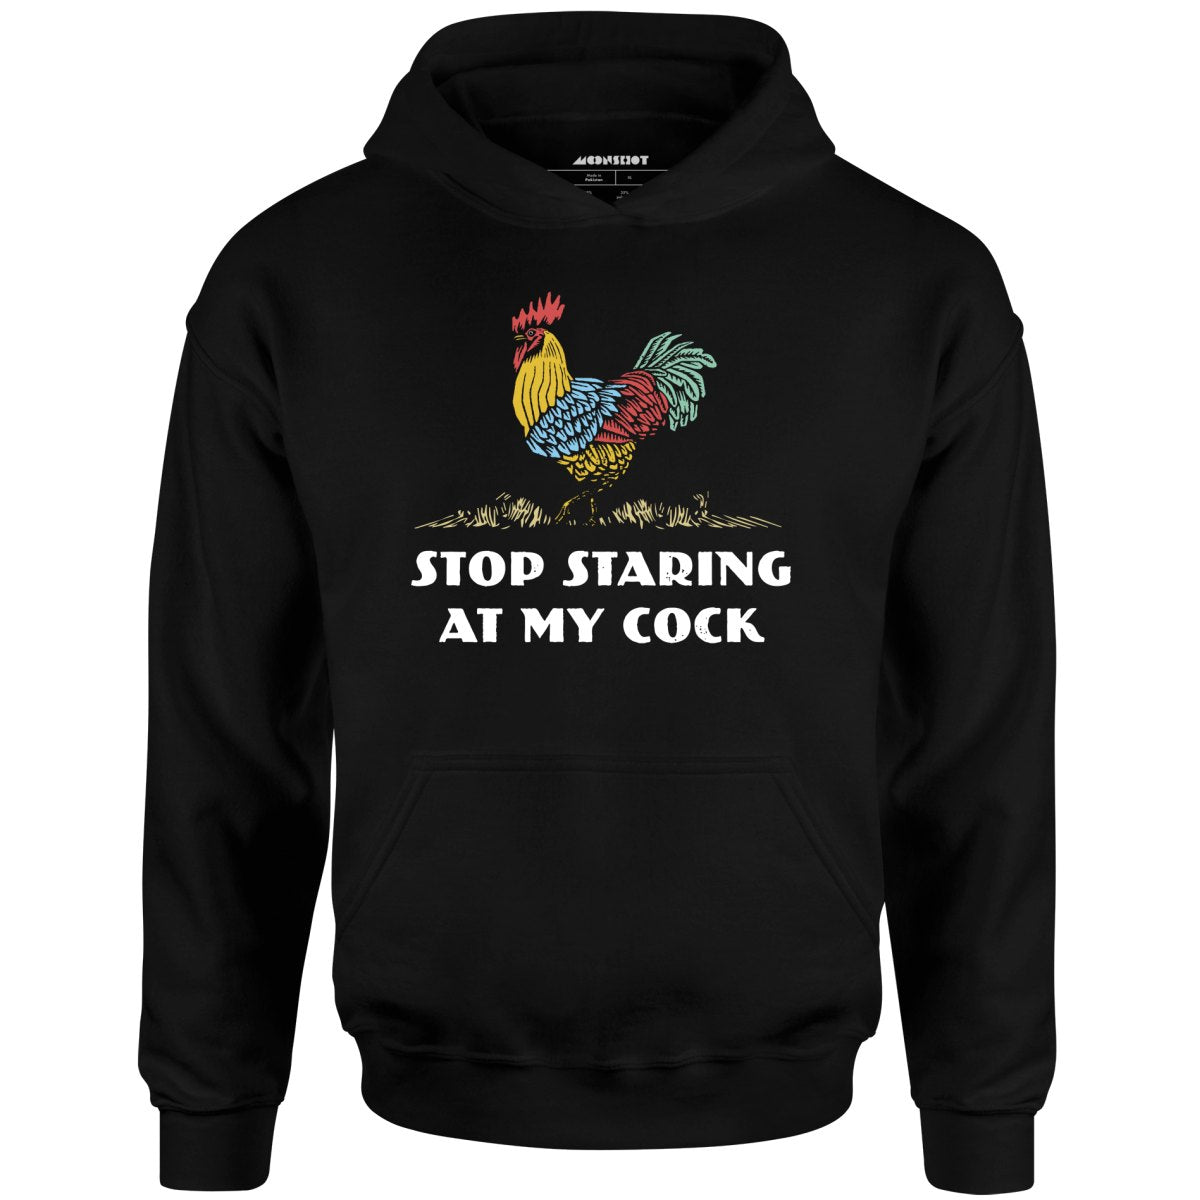 Stop Staring at My Cock - Unisex Hoodie